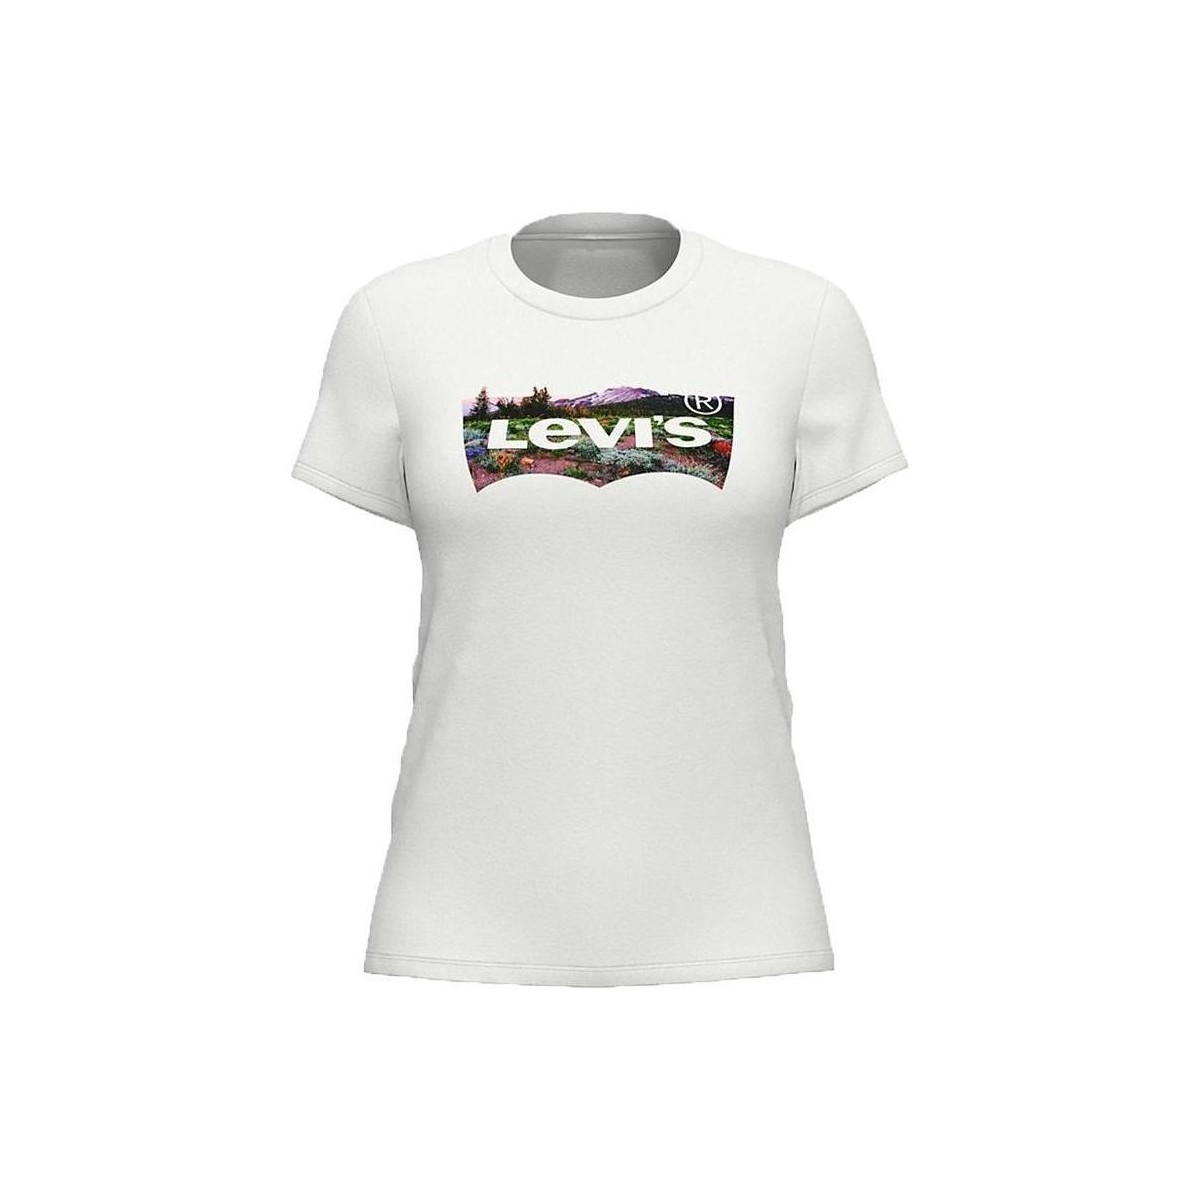 textil Mujer Camisetas manga corta Levi's 17369-1926 Blanco